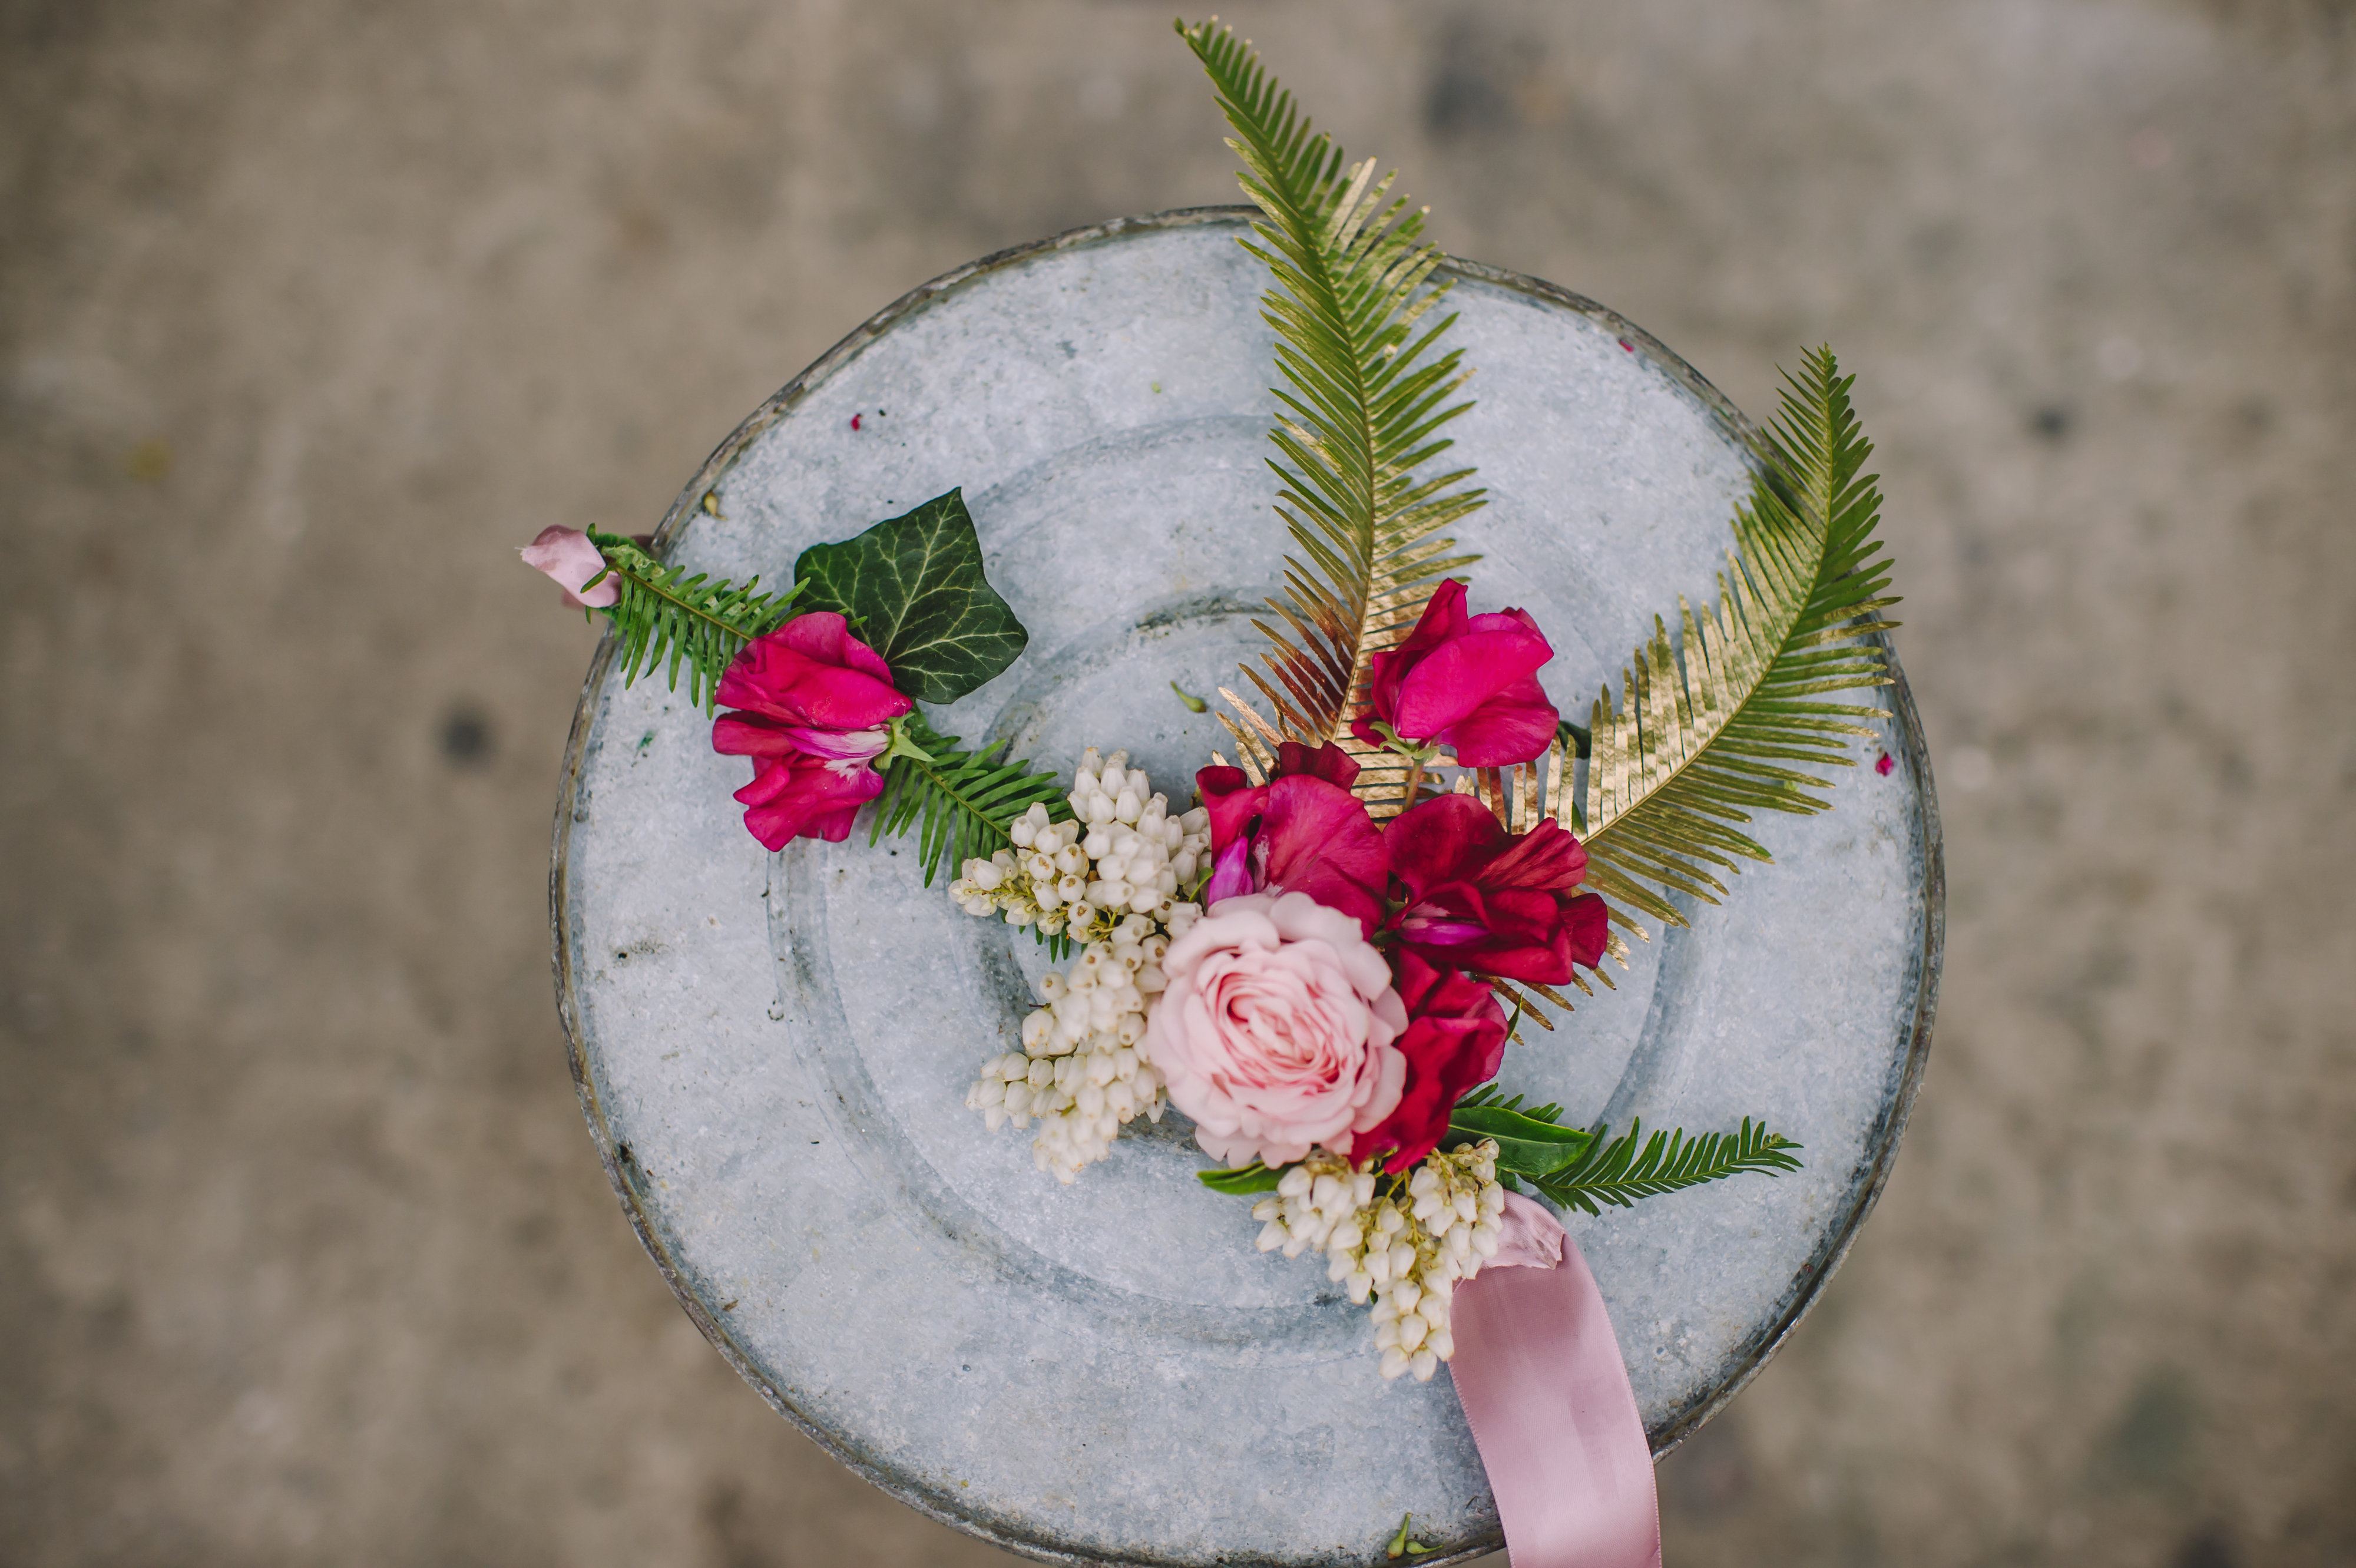 Choosing Wedding Colors: A Durham Florist Tips